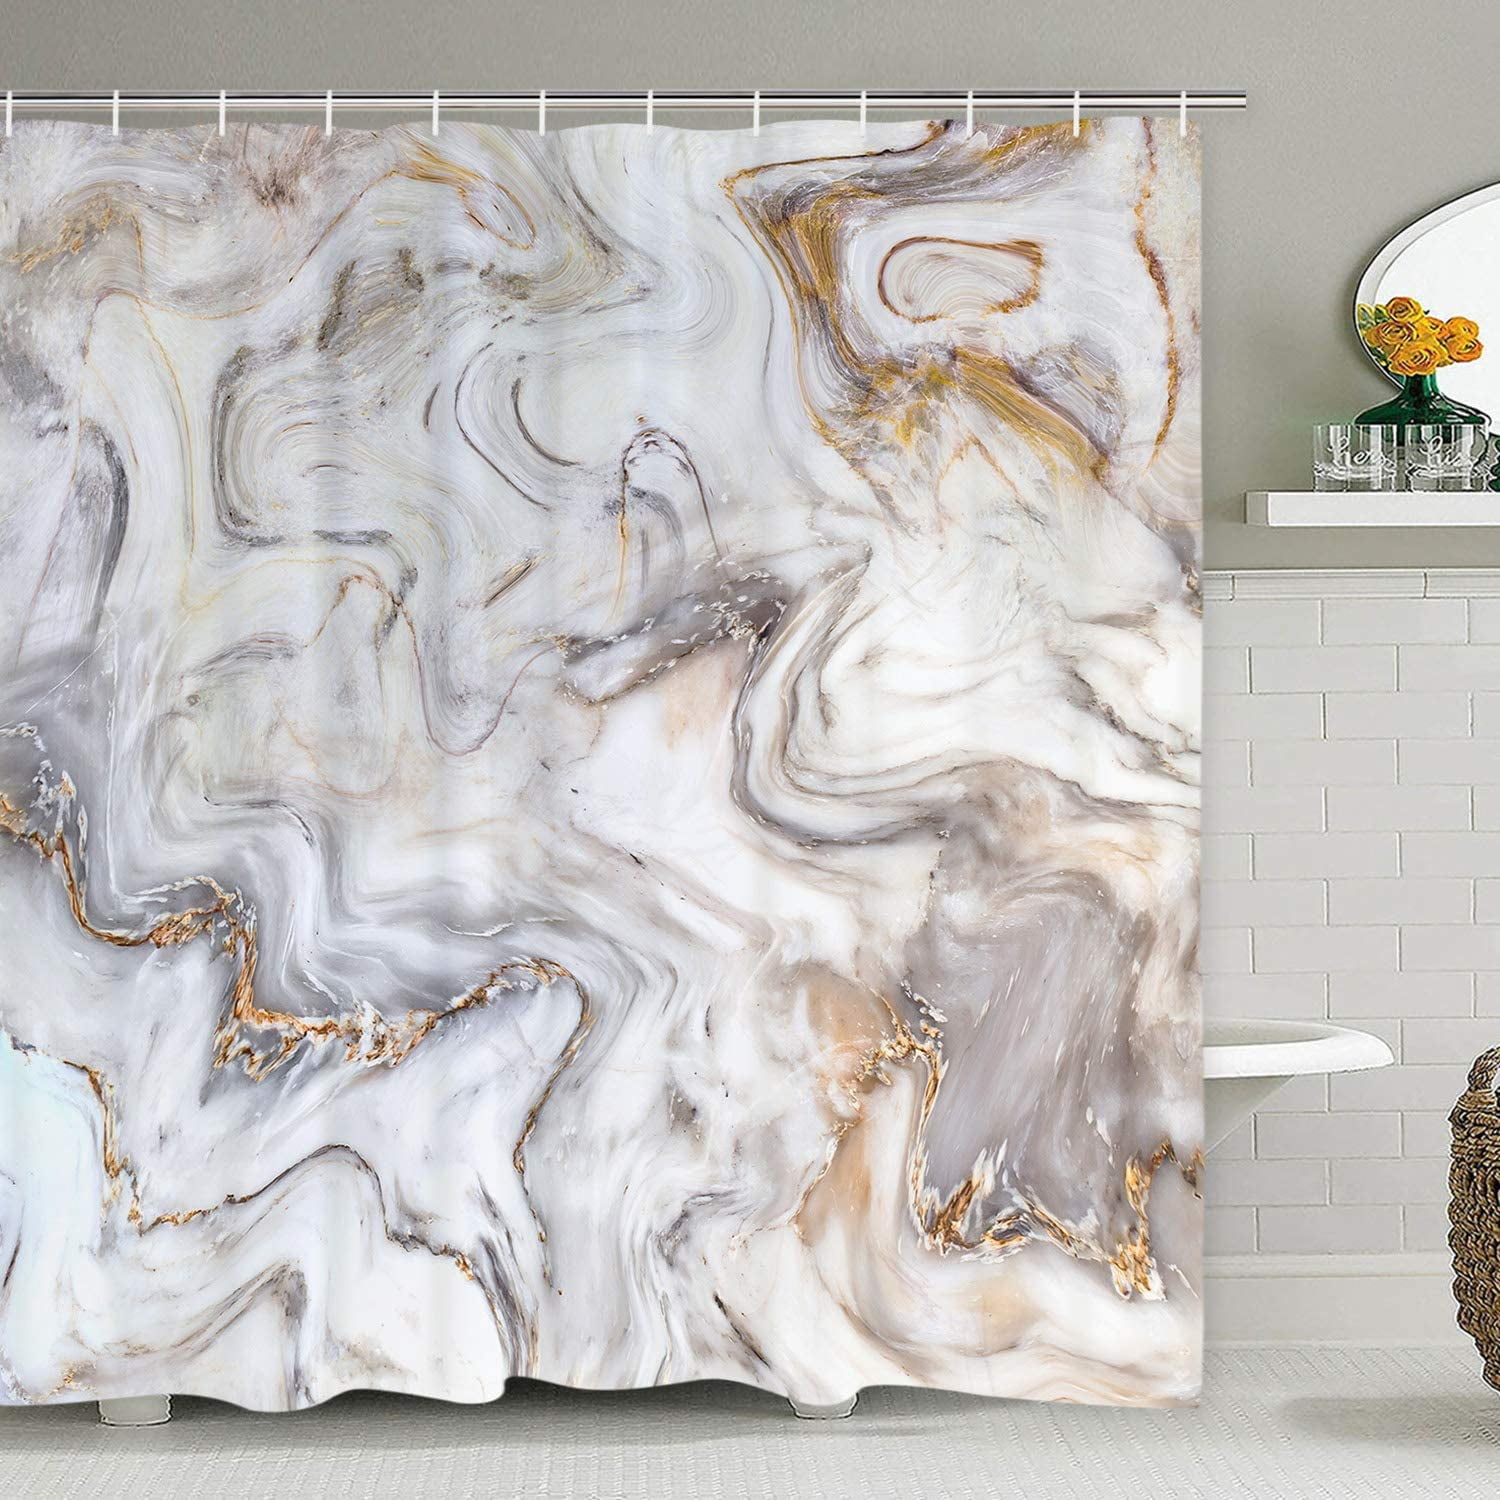 Waterproof Polyester Marble Pattern Shower Curtain 12 Hooks Bathroom Curtain 